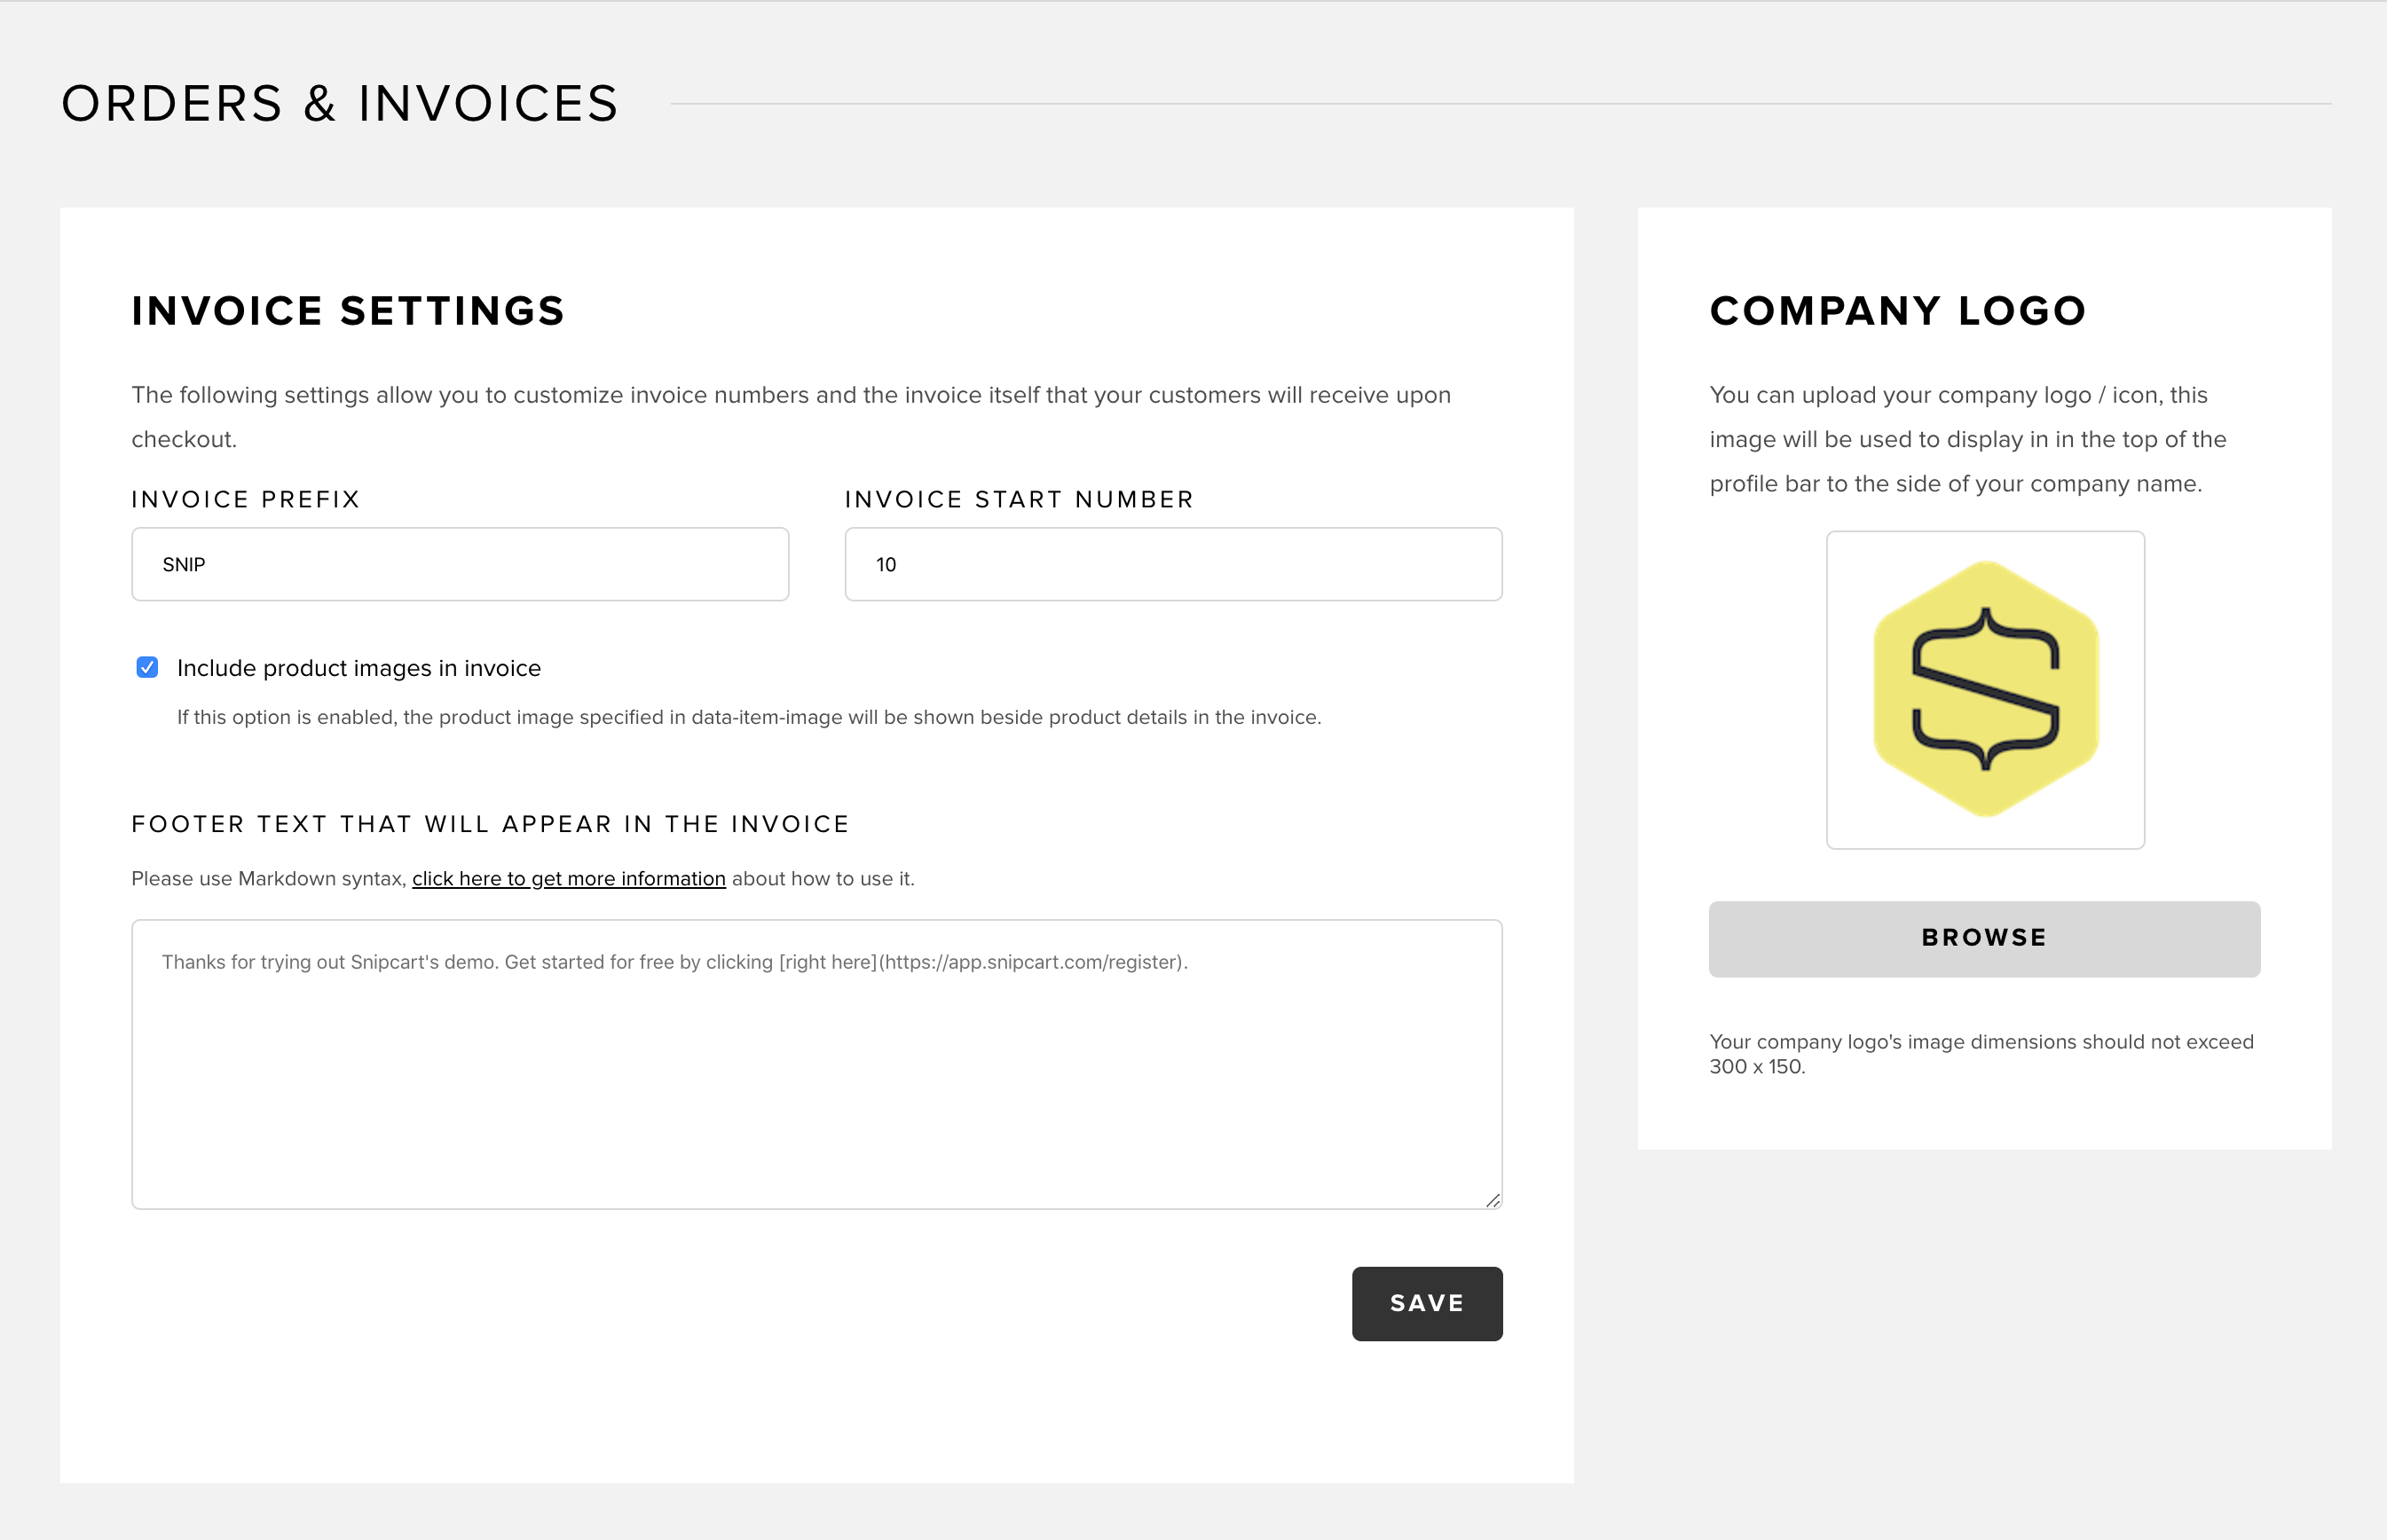 Invoice customization example in Snipcart dashboard